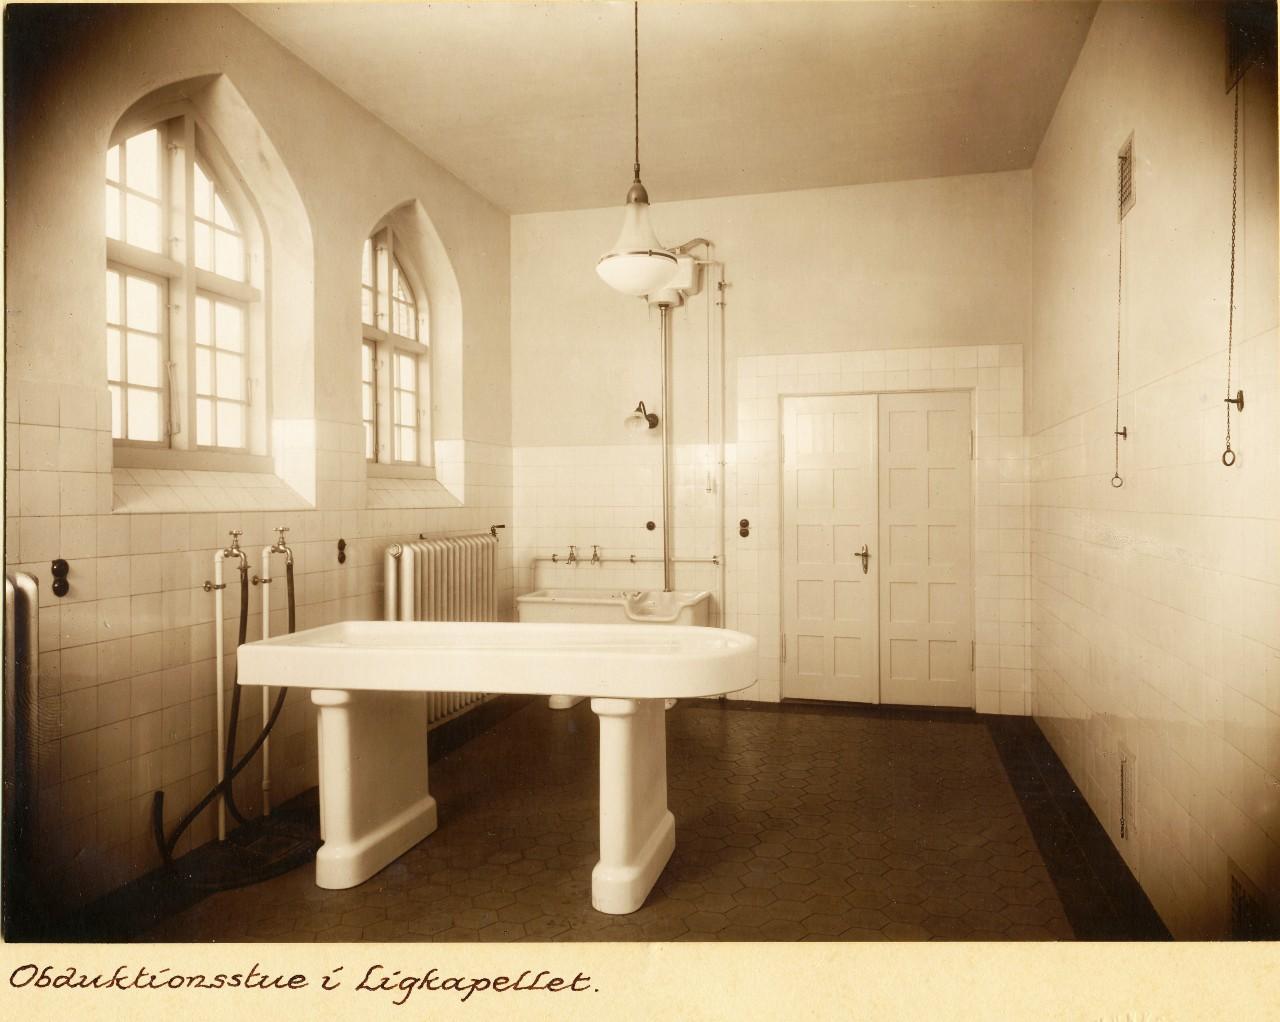 Sygehuset fik i 1922 et nyt ligkapel (Viborg Museum).